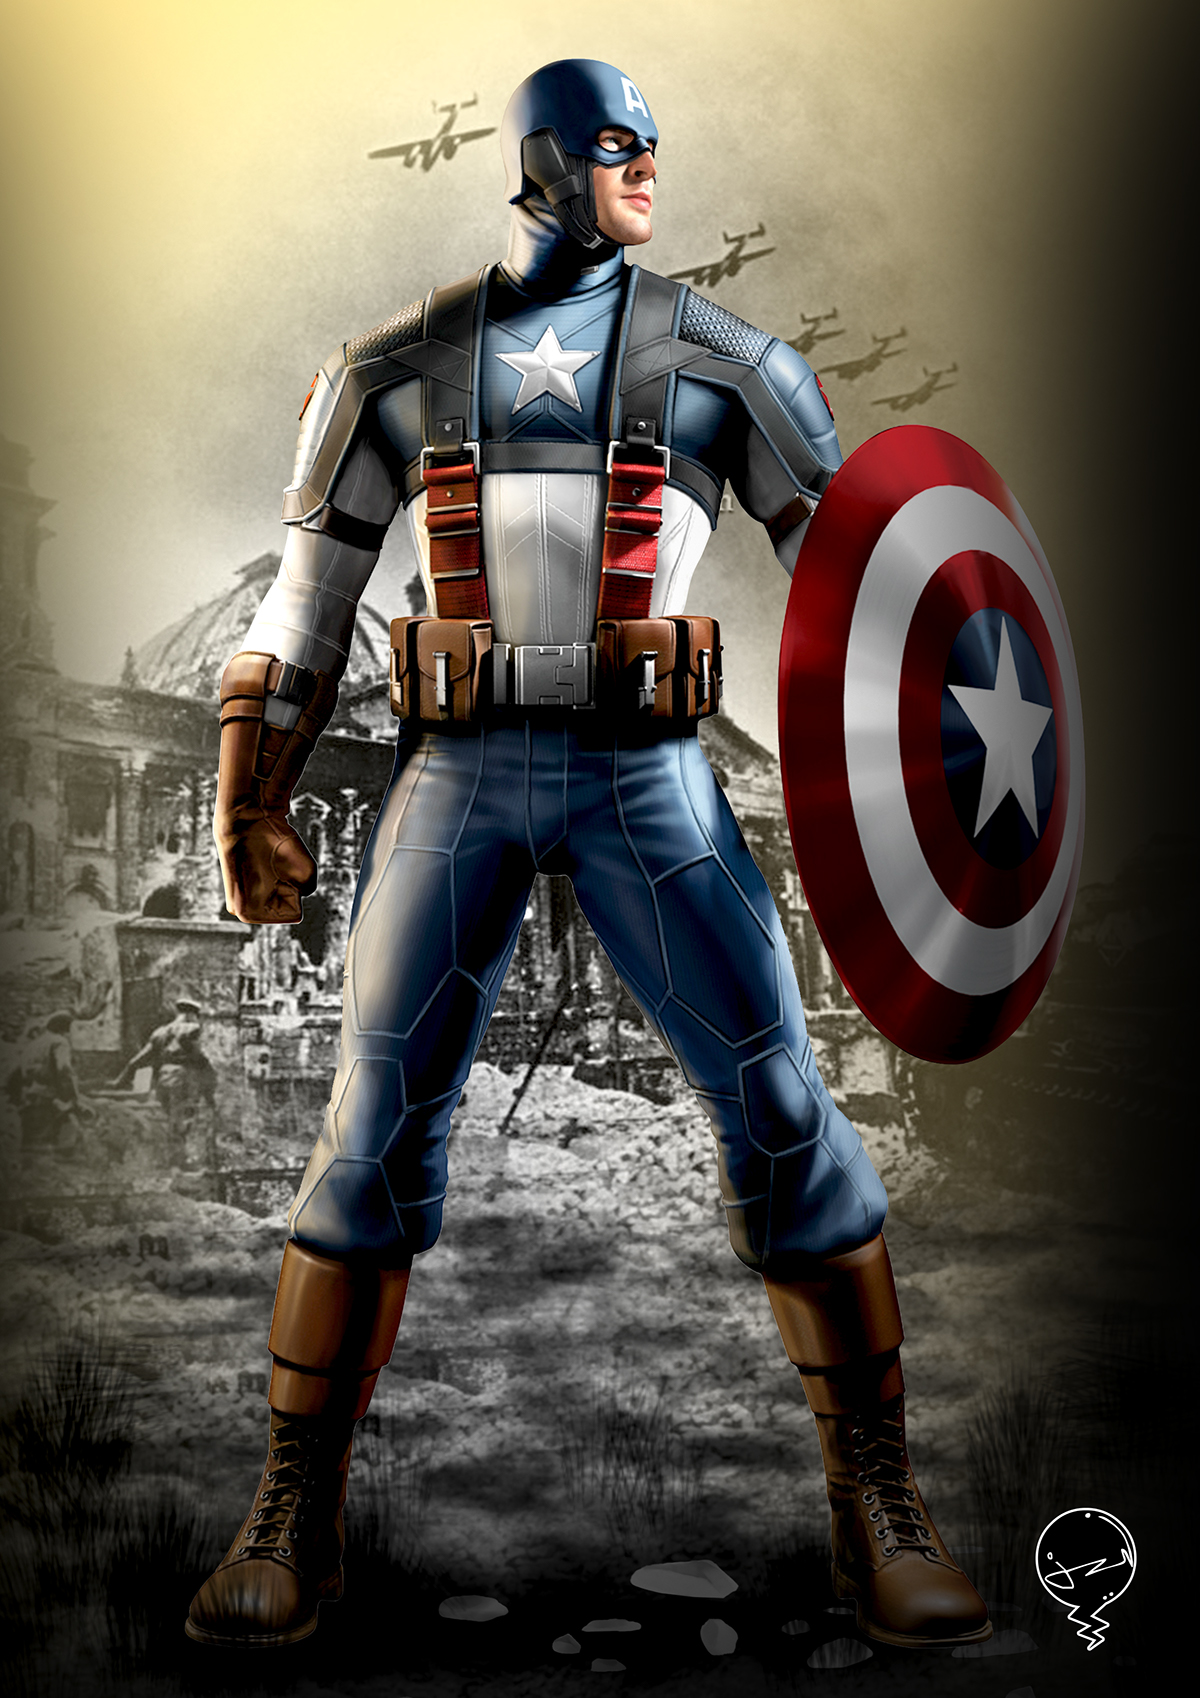 Avengers captain america ironman Hulk hulk buster hawk eye Thor